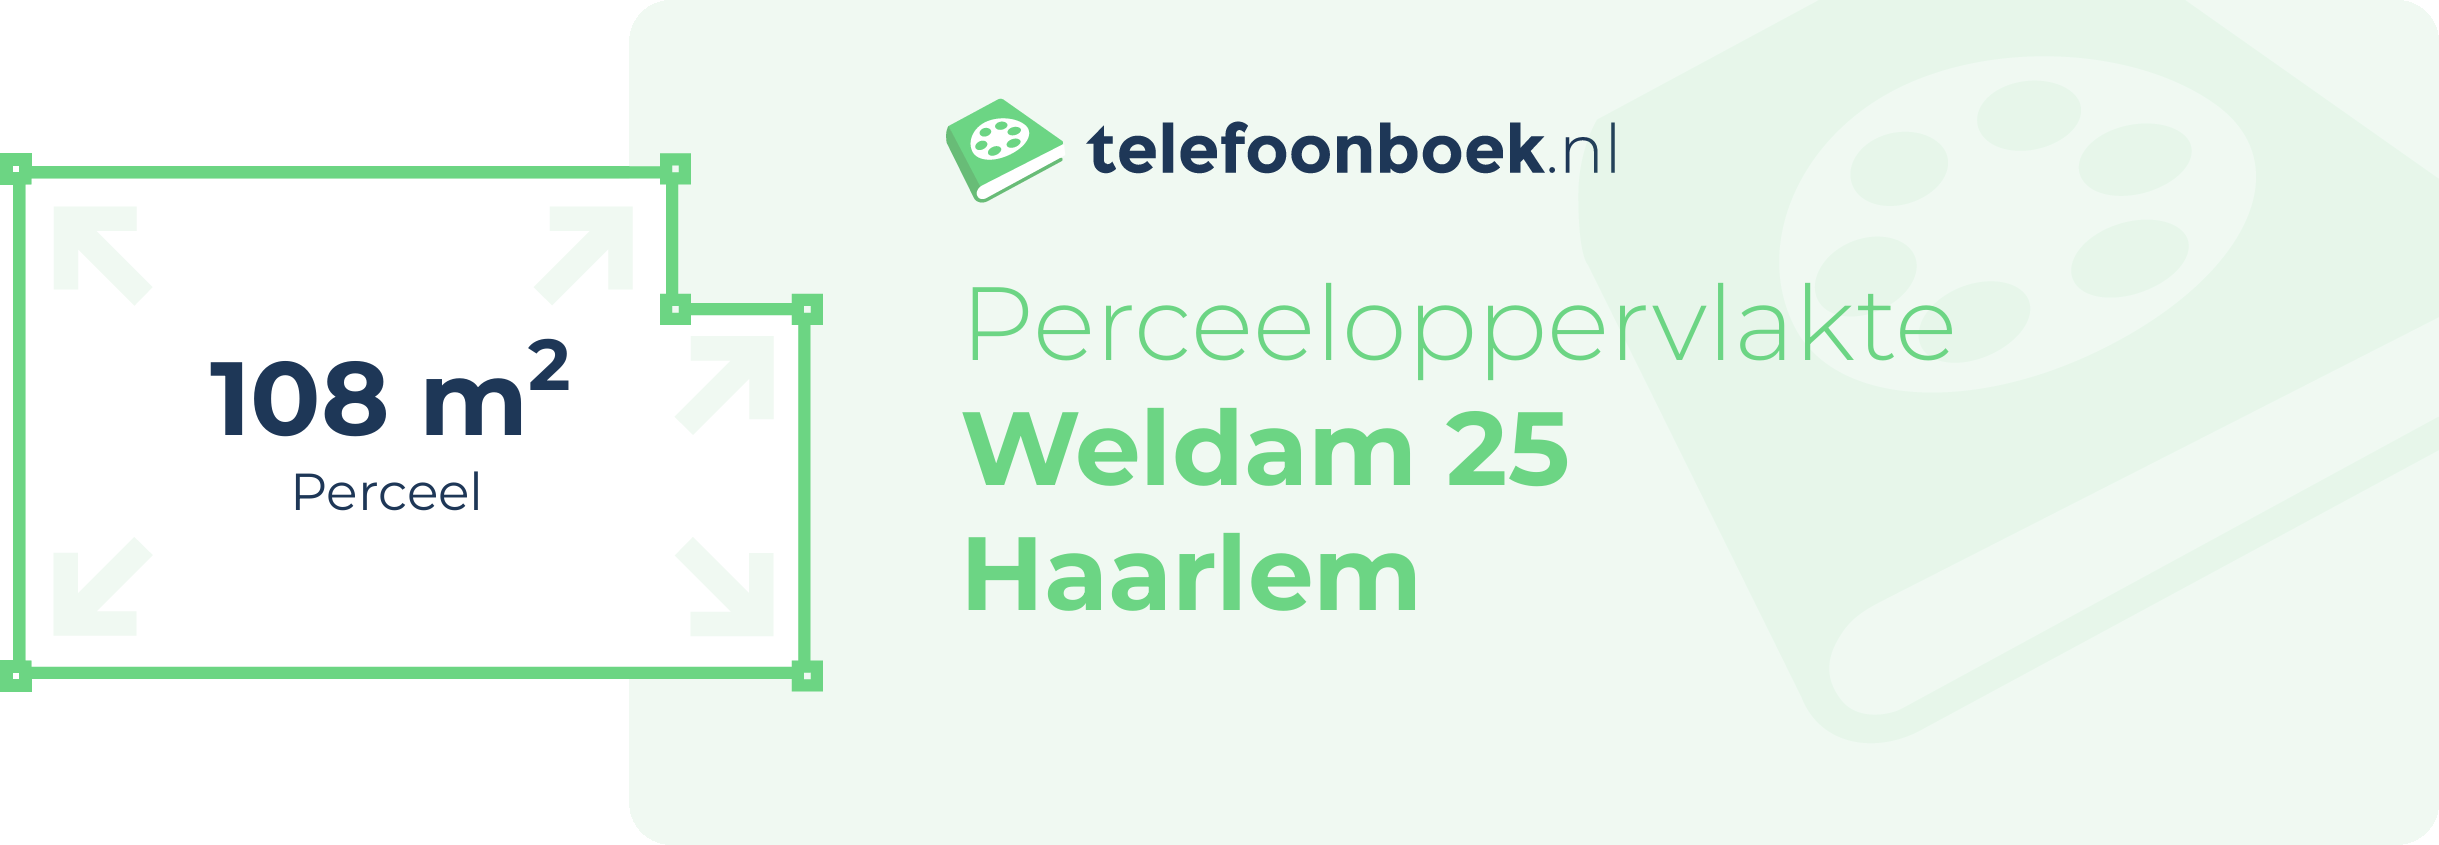 Perceeloppervlakte Weldam 25 Haarlem